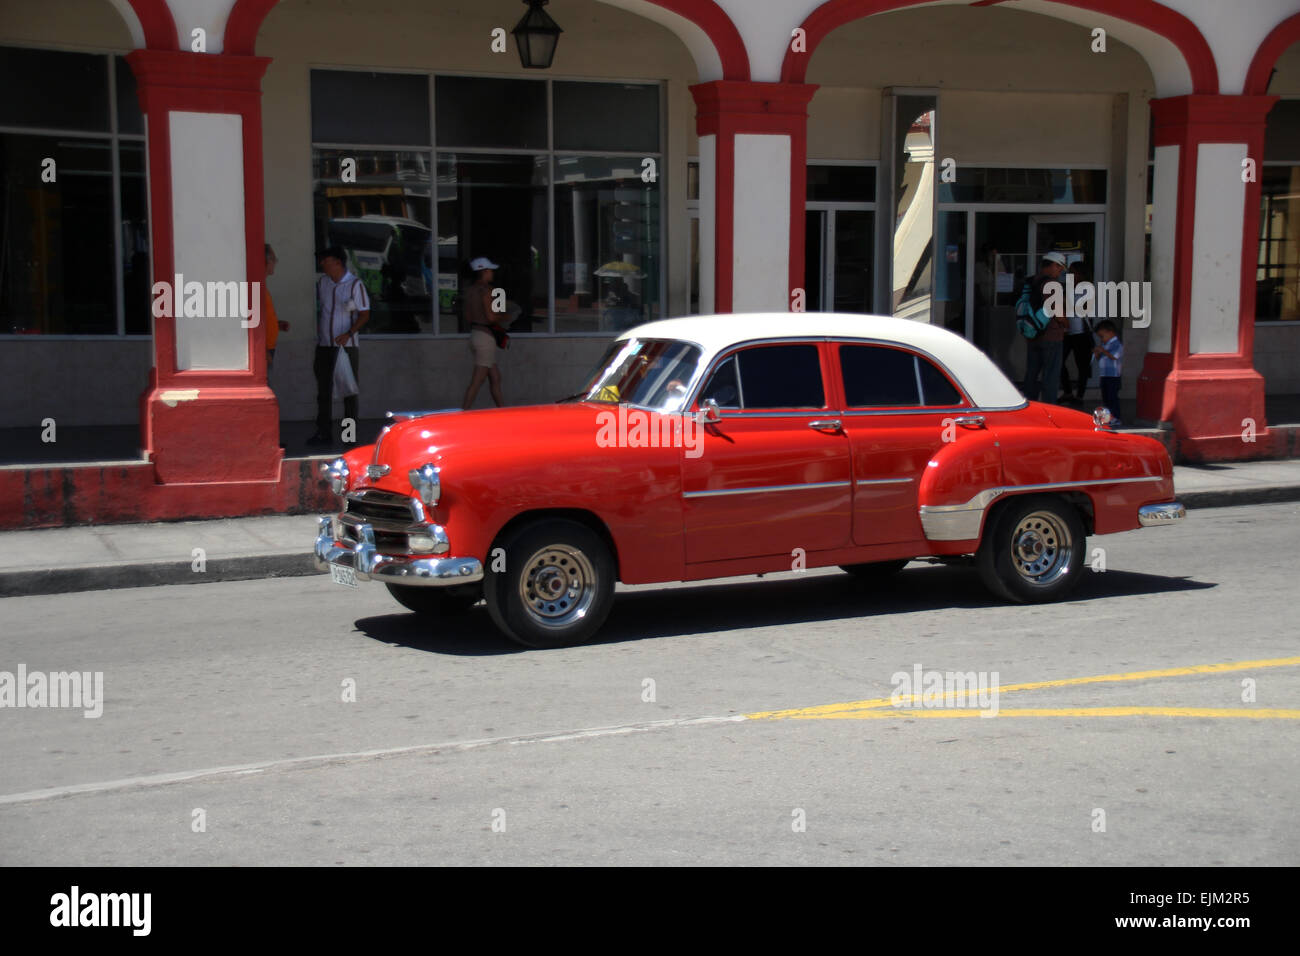 A Car in Cuba 2015 Stock Photo